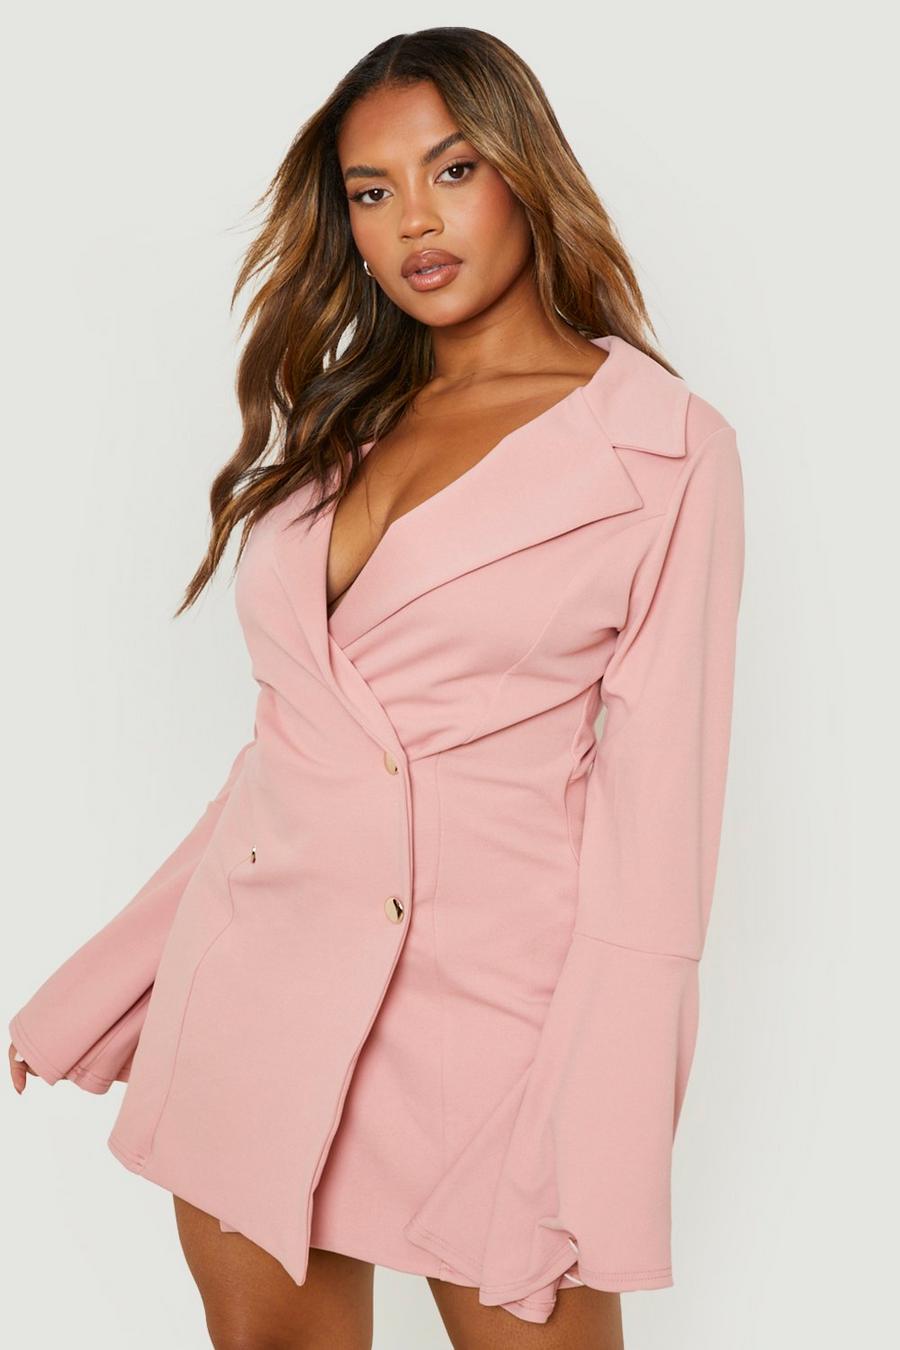 Soft pink Plus Flare Sleeve Blazer Playsuit